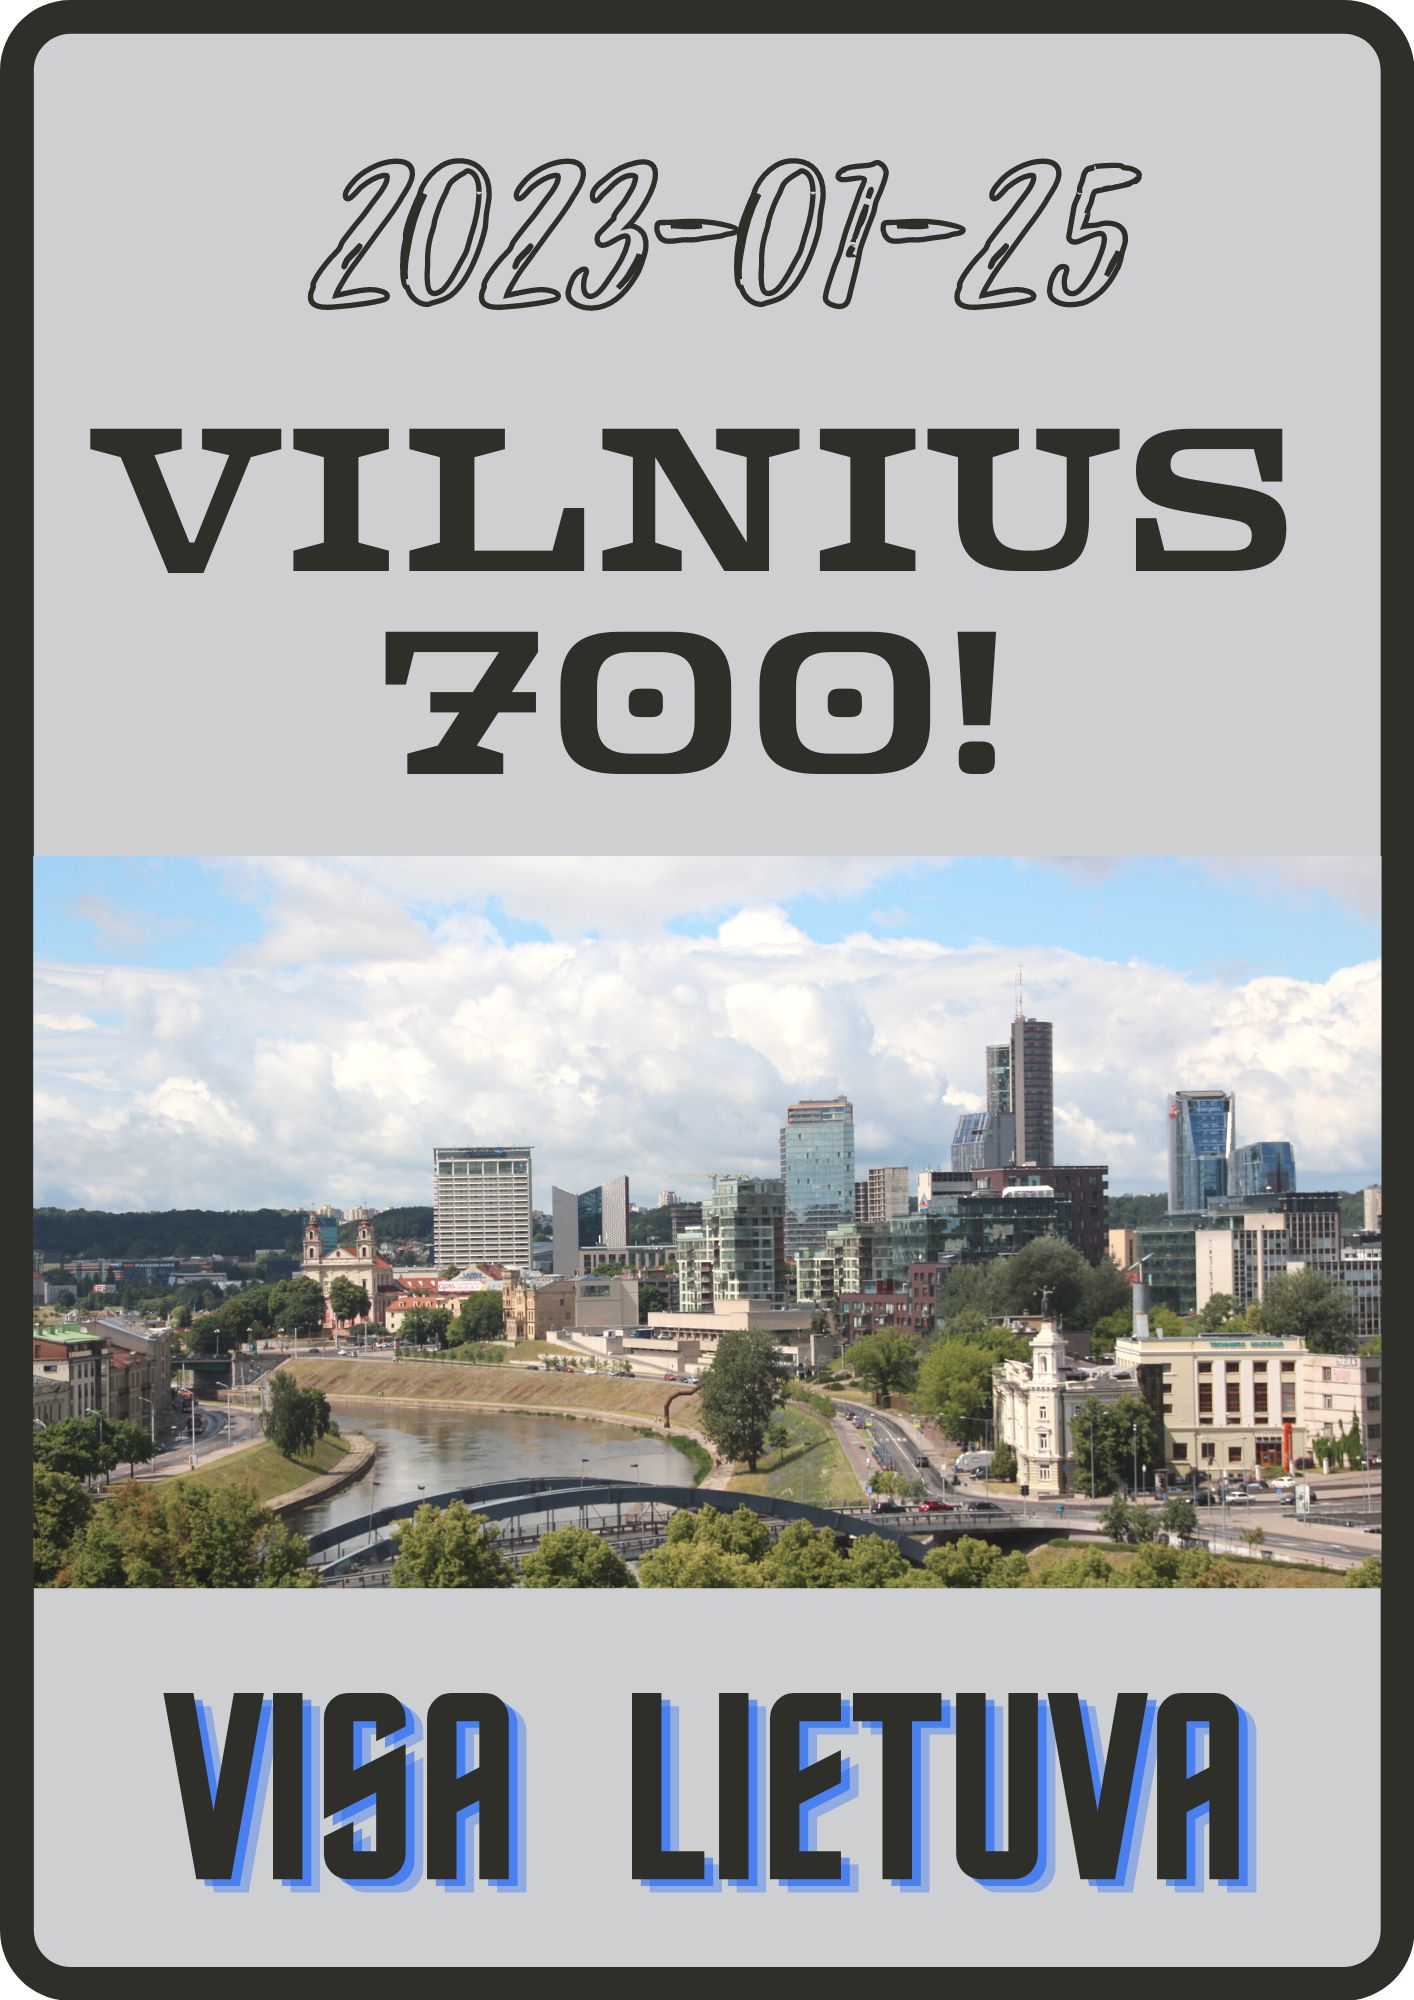 VILNIUS 700!